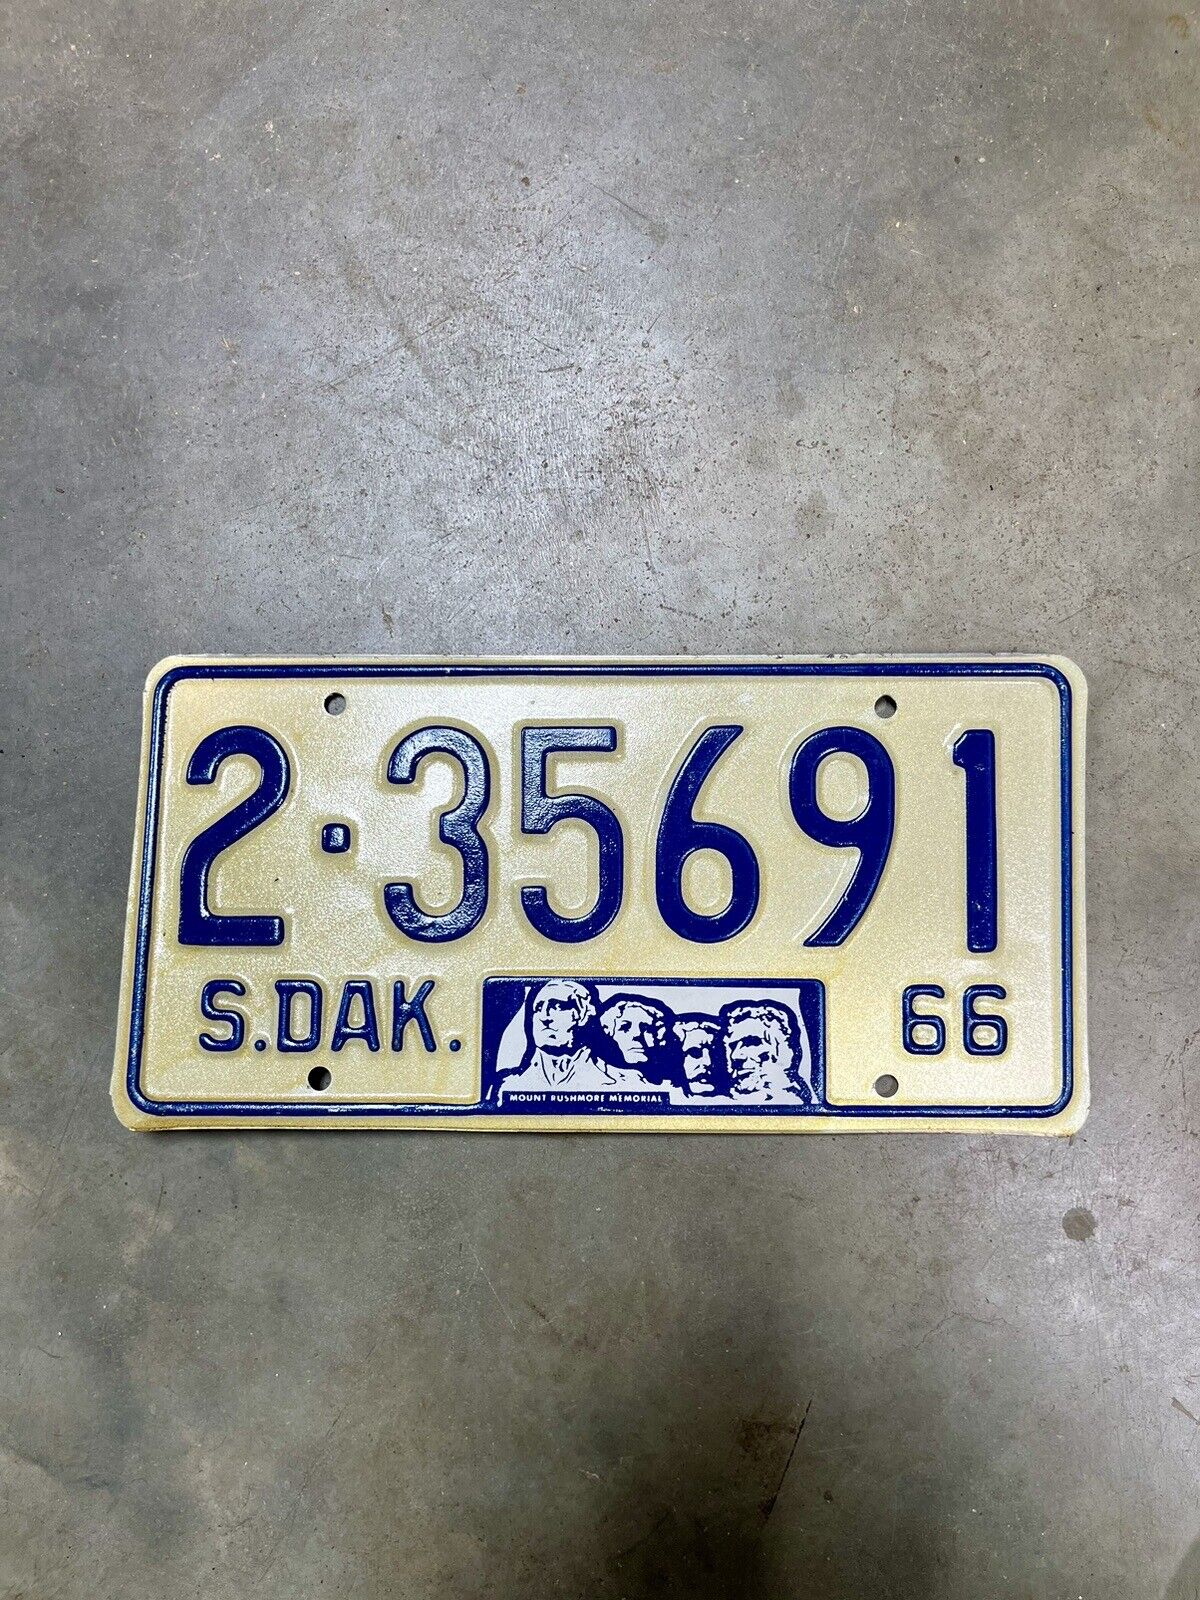 1966 South Dakota Passenger Mt Rushmore License Plate # 2-35691